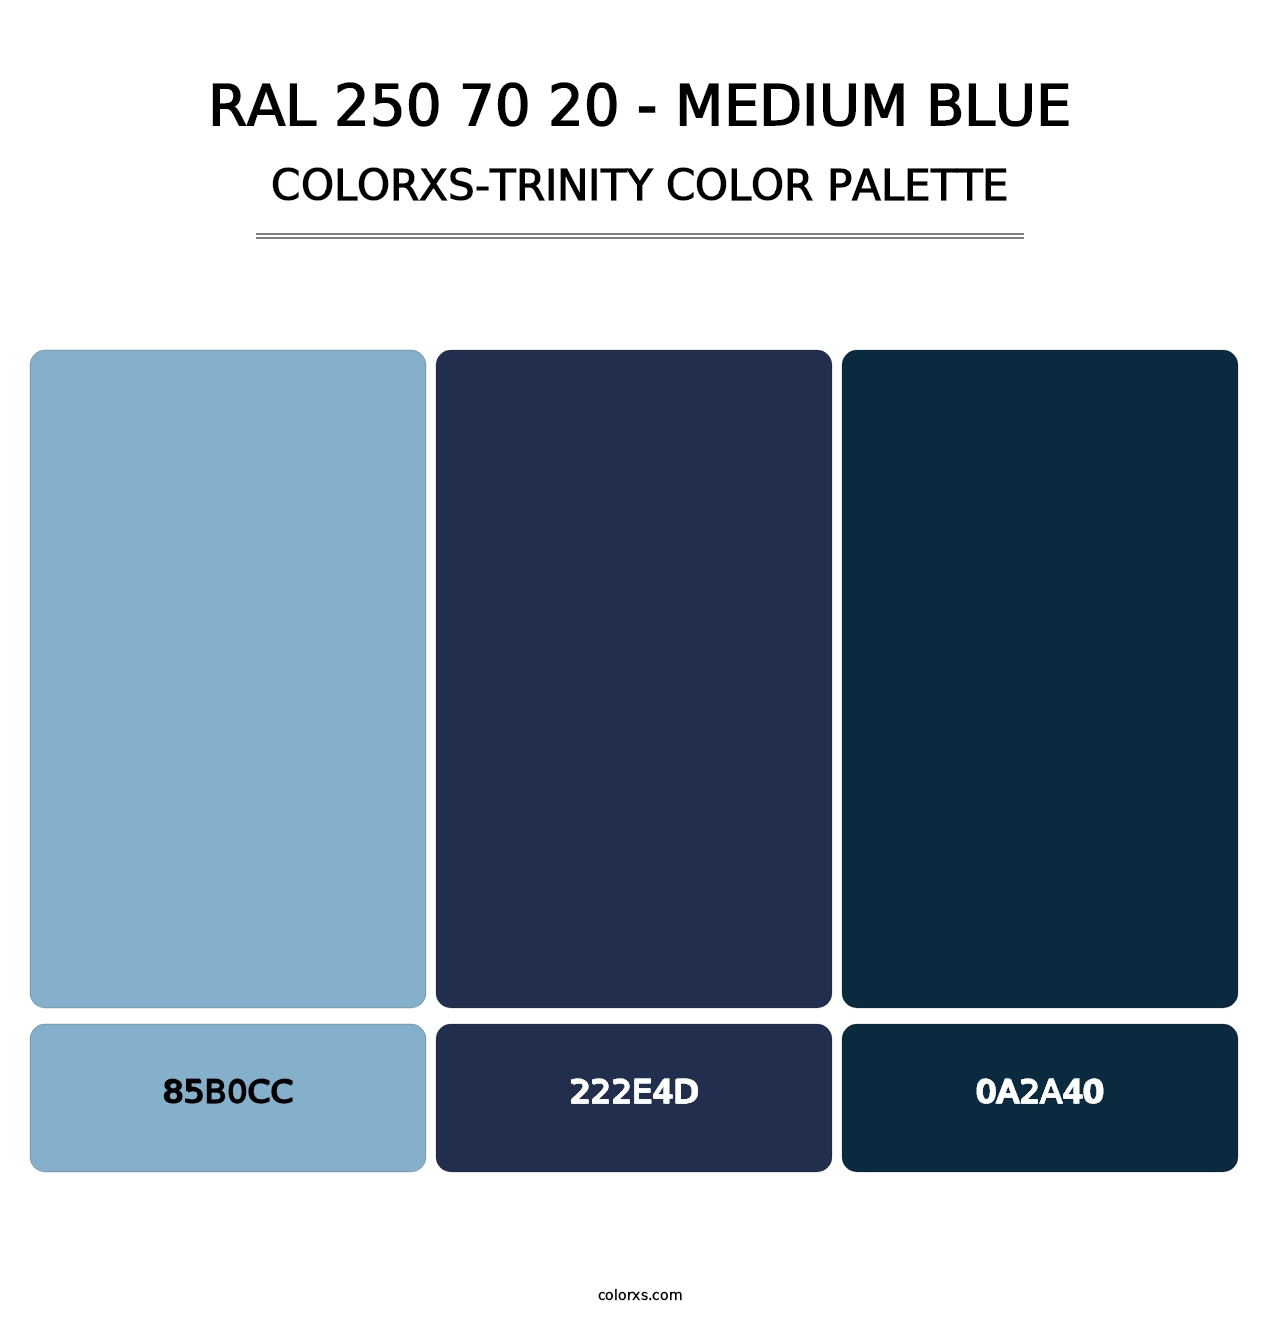 RAL 250 70 20 - Medium Blue - Colorxs Trinity Palette